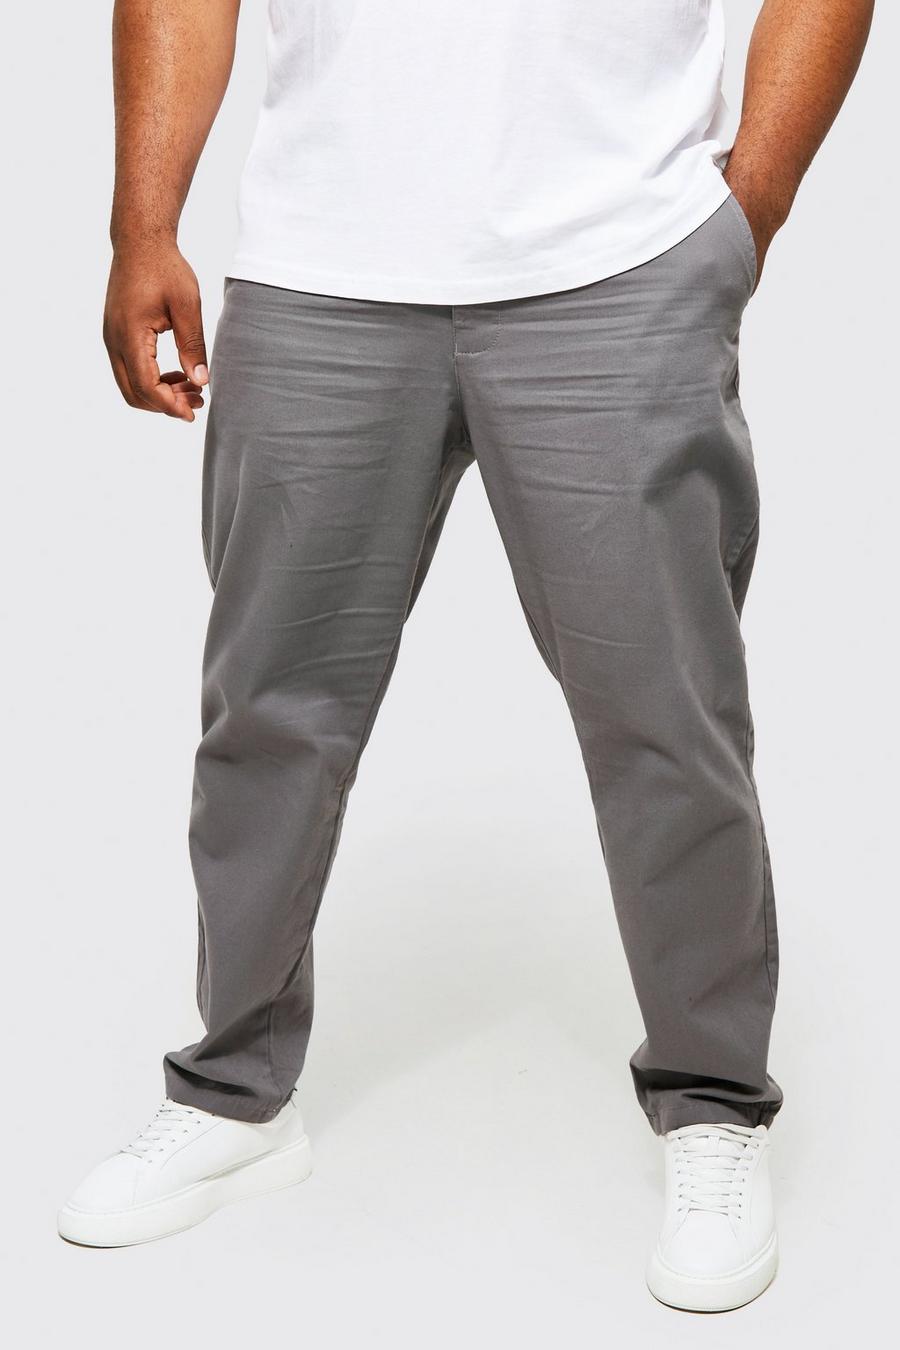 Pantaloni Chino Plus Size Slim Fit, Charcoal grigio